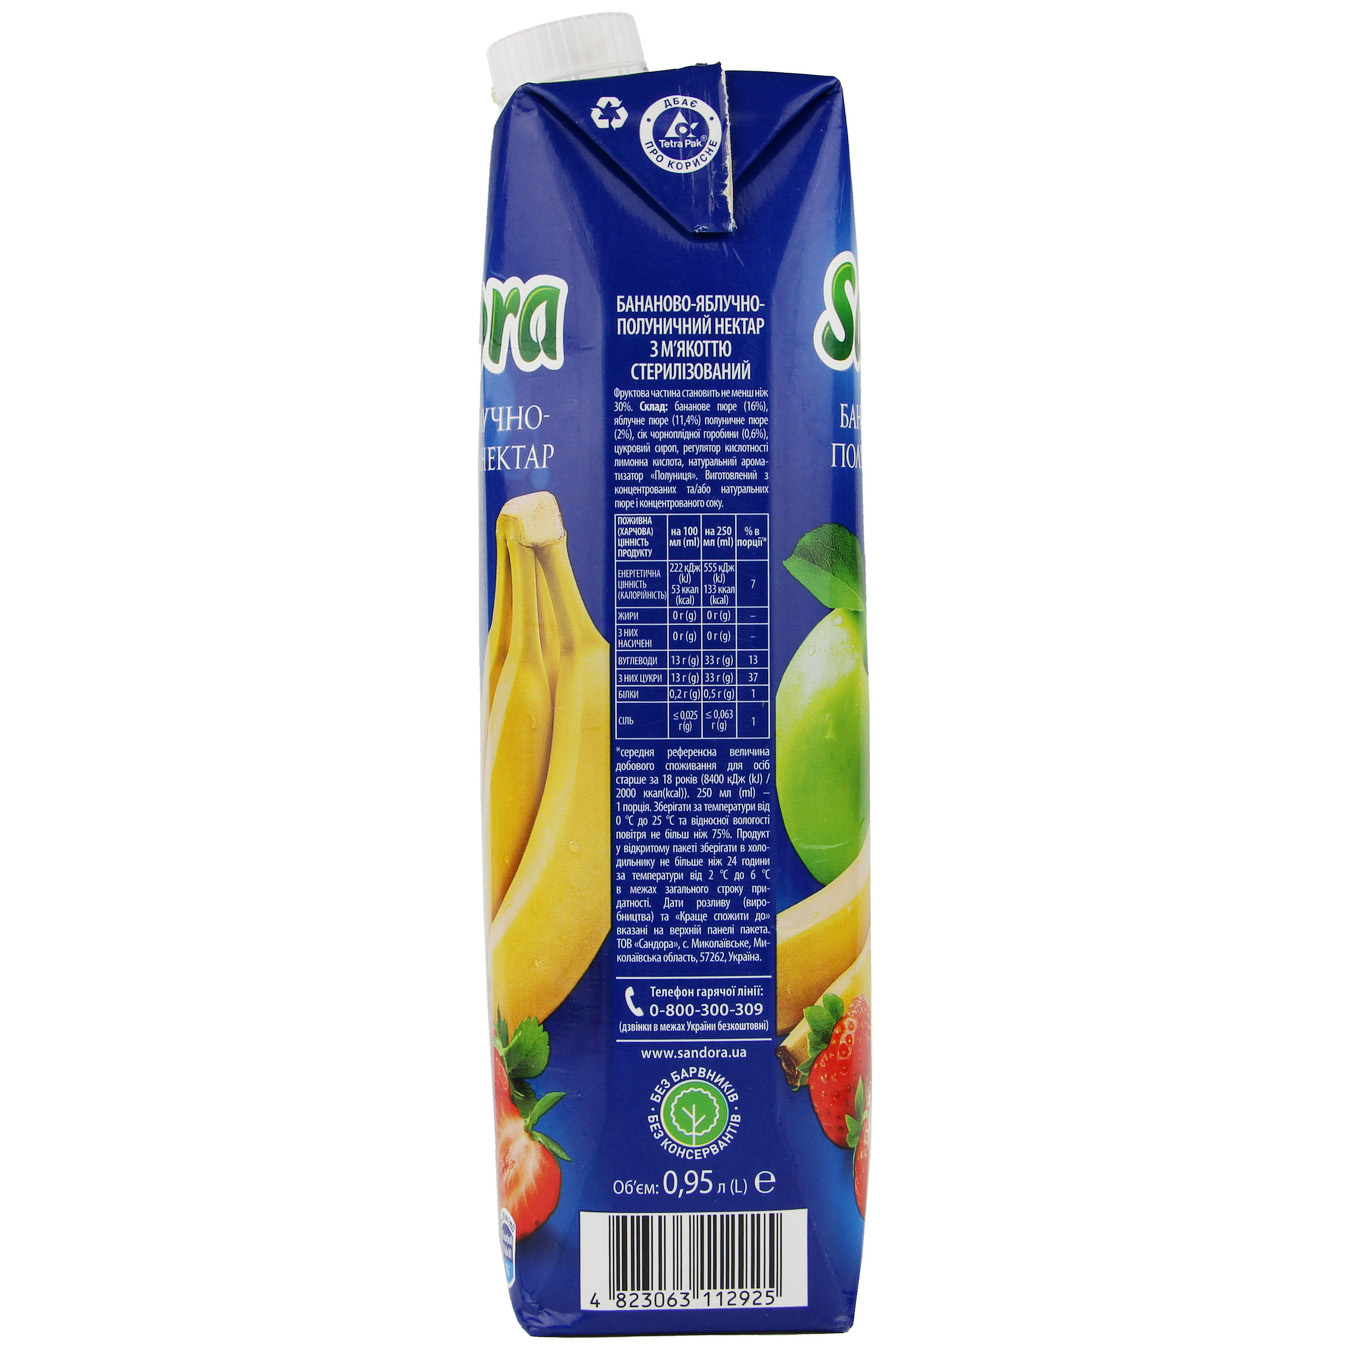 Sandora Banana-Apple-Strawberry Nectar 0,95l 2